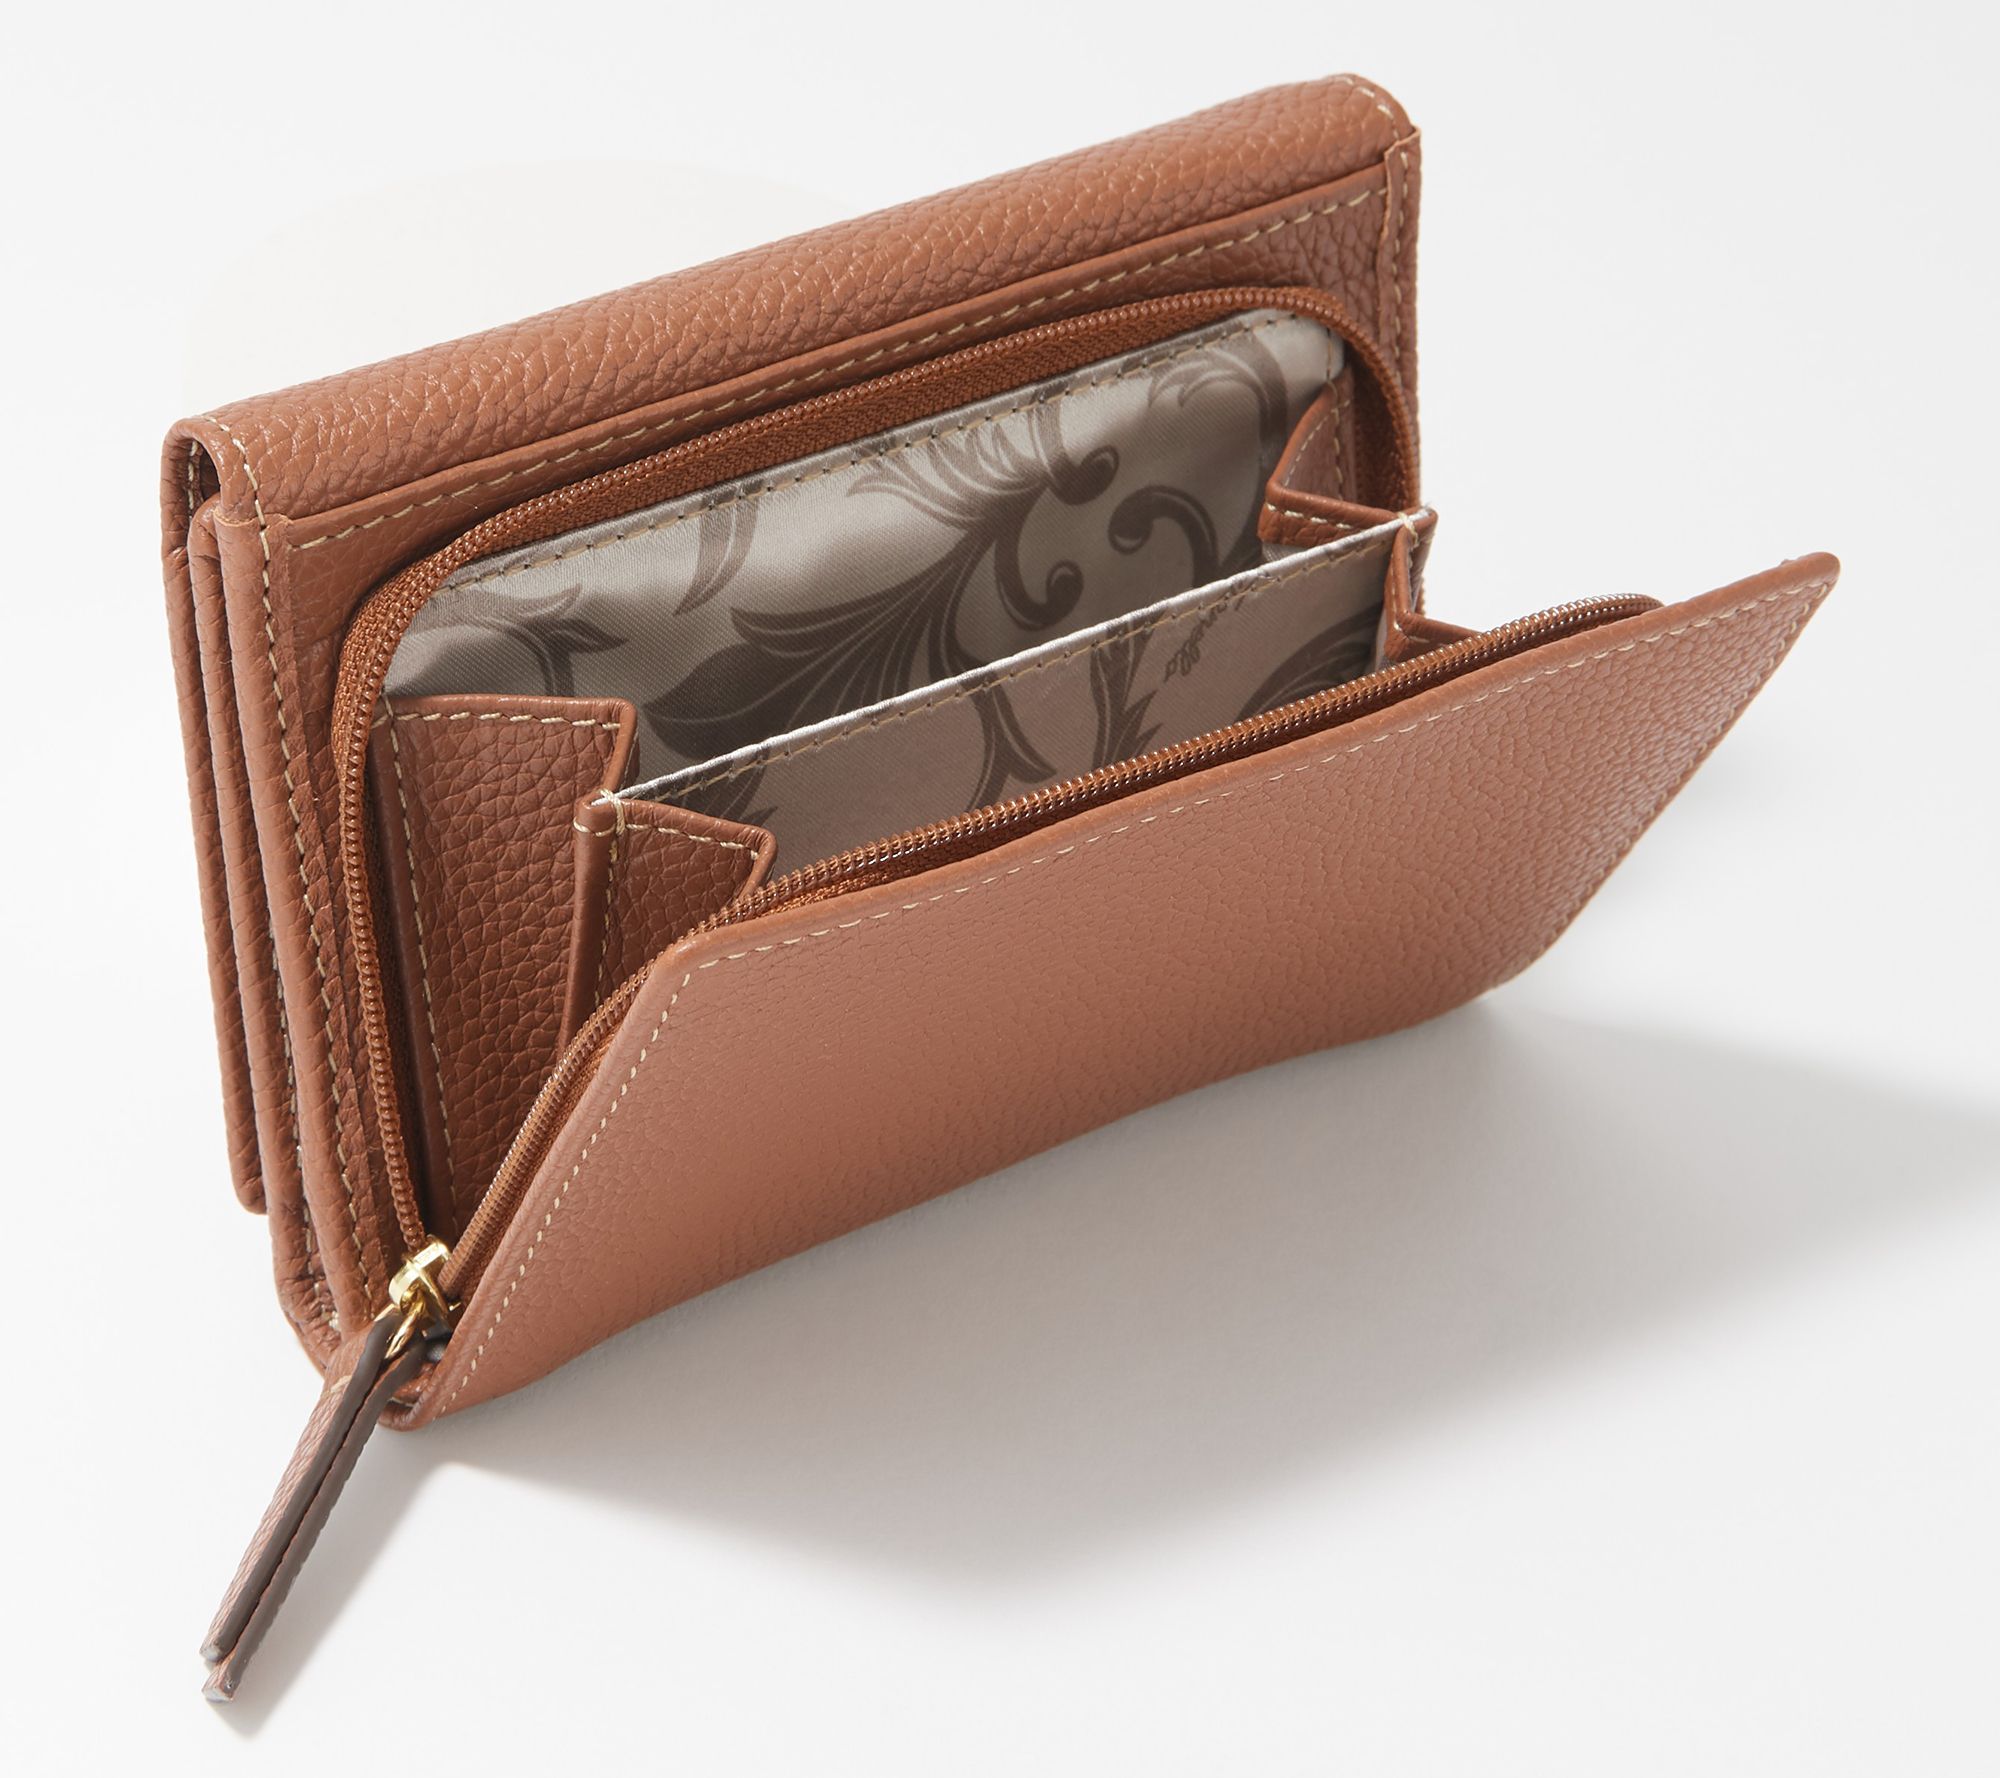 Tignanello Leather Astor TriFold Wallet - QVC.com